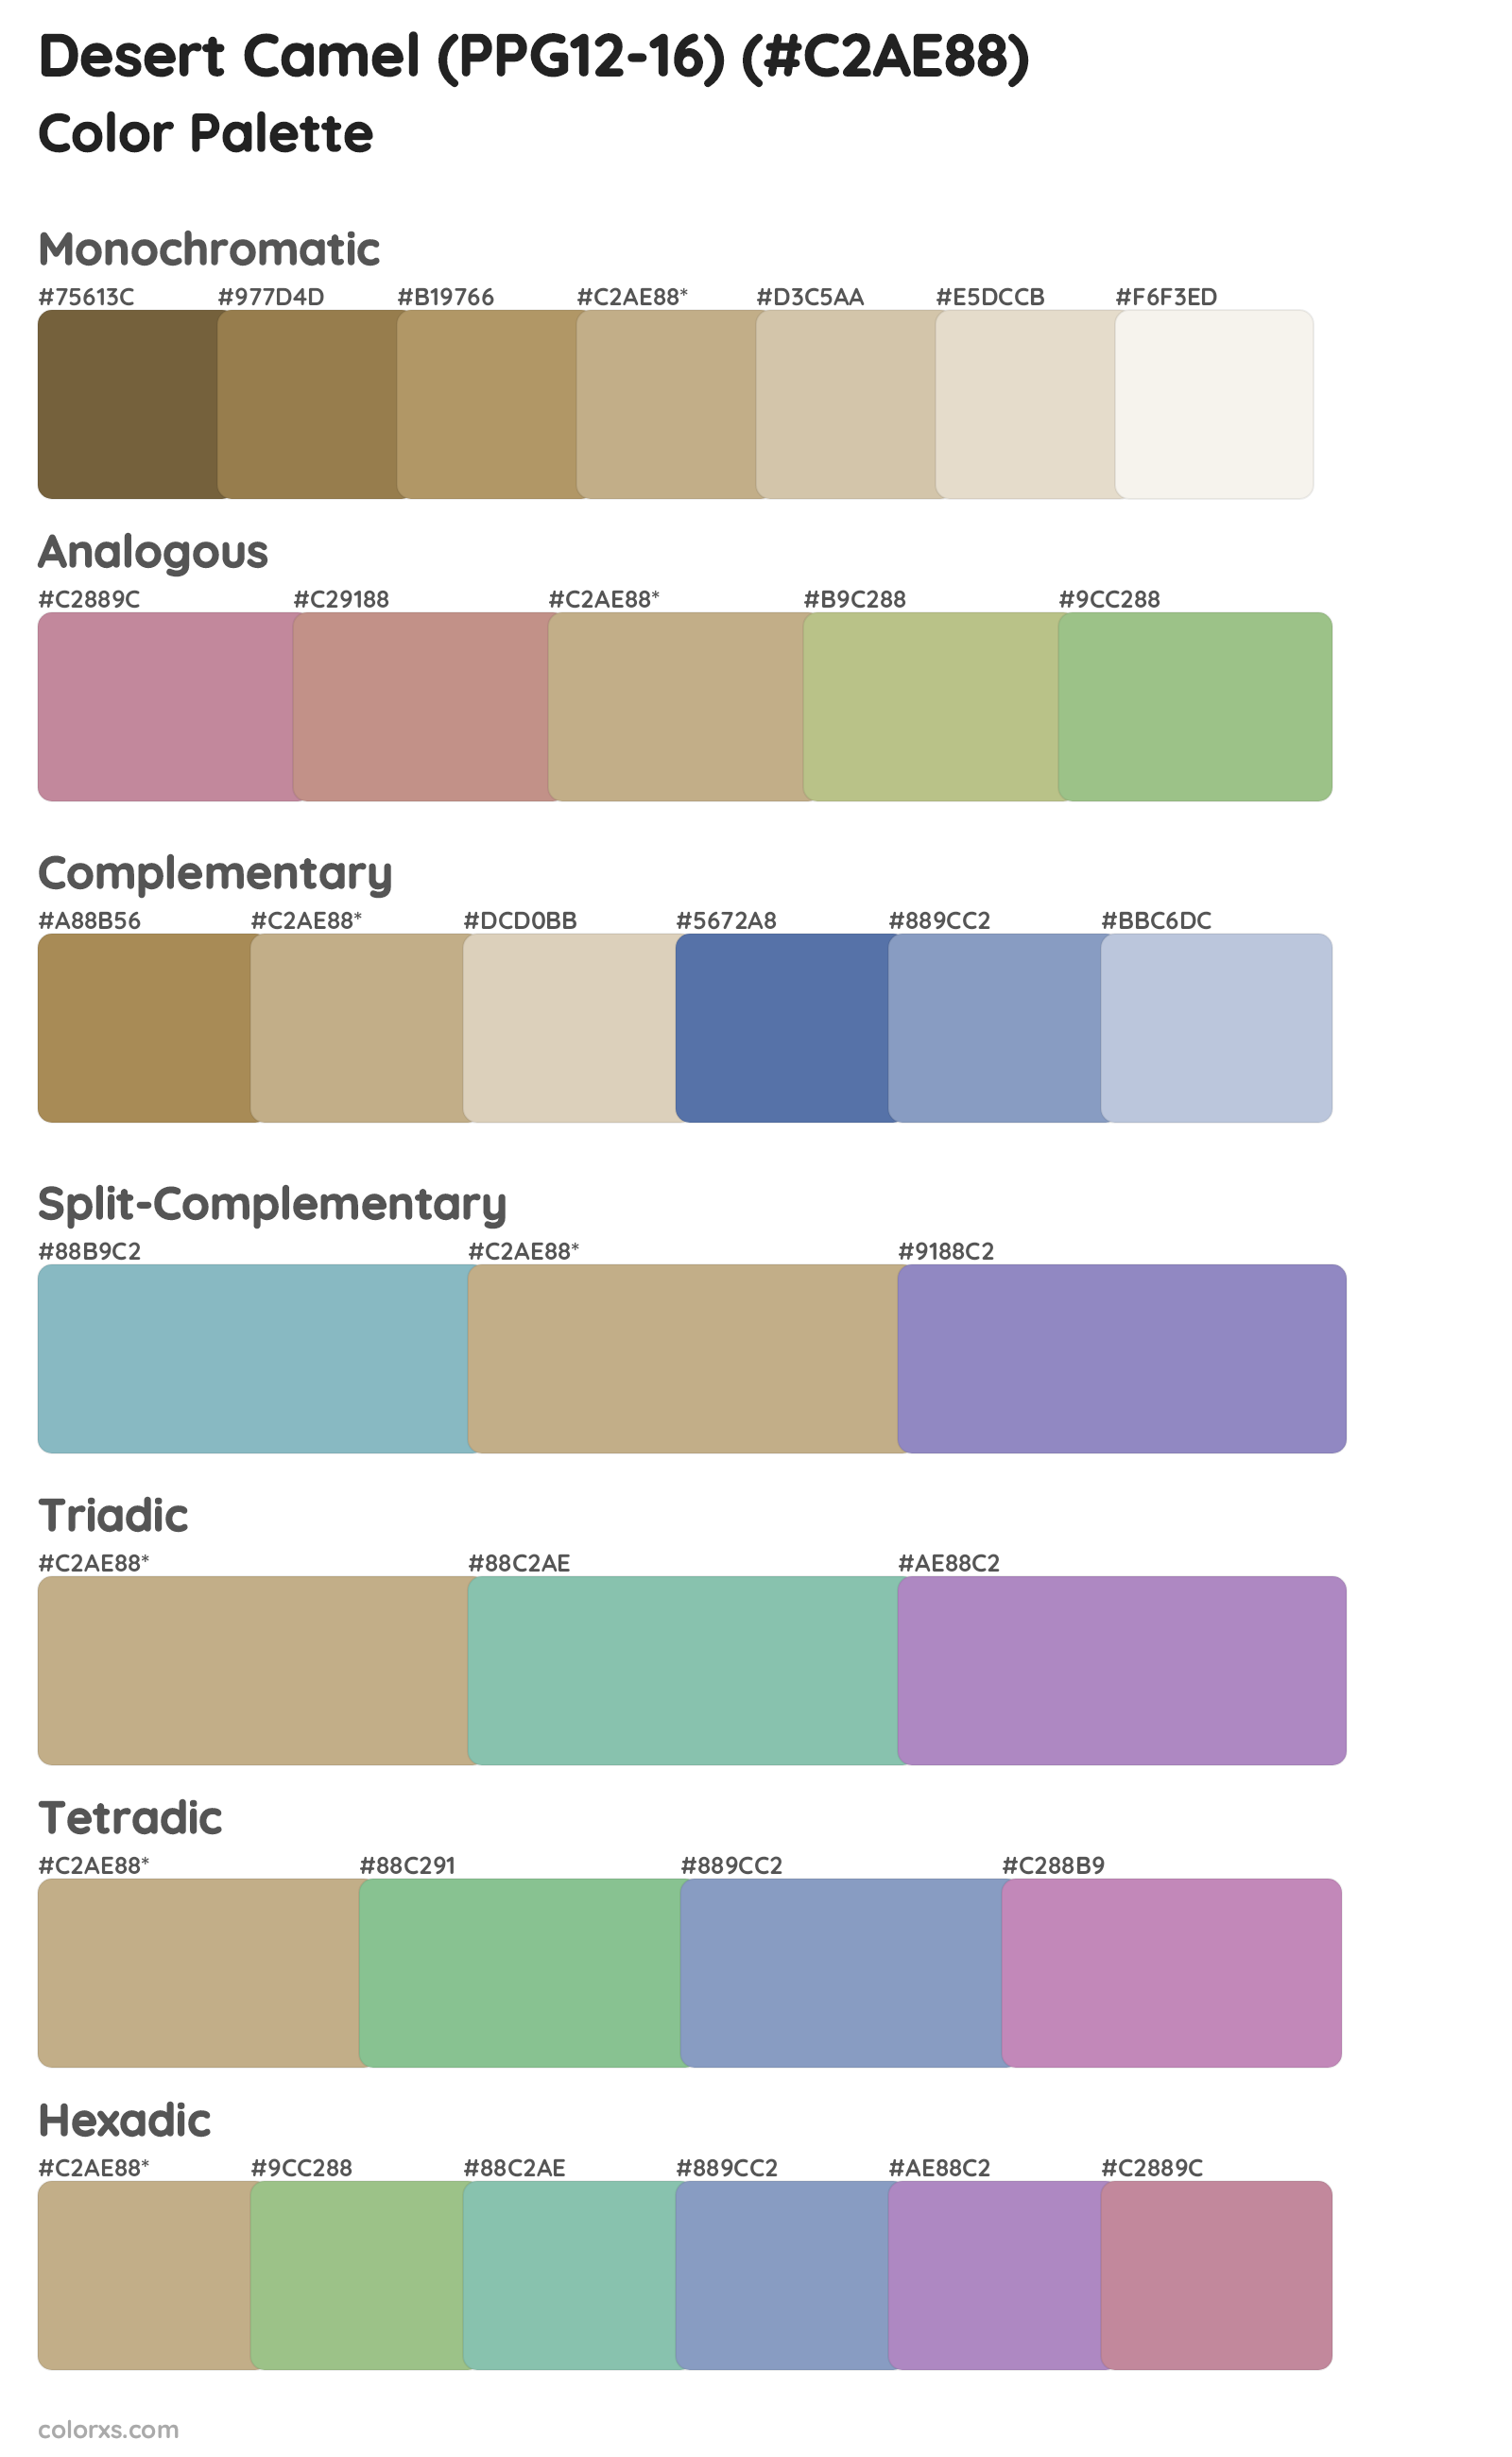 Desert Camel (PPG12-16) Color Scheme Palettes